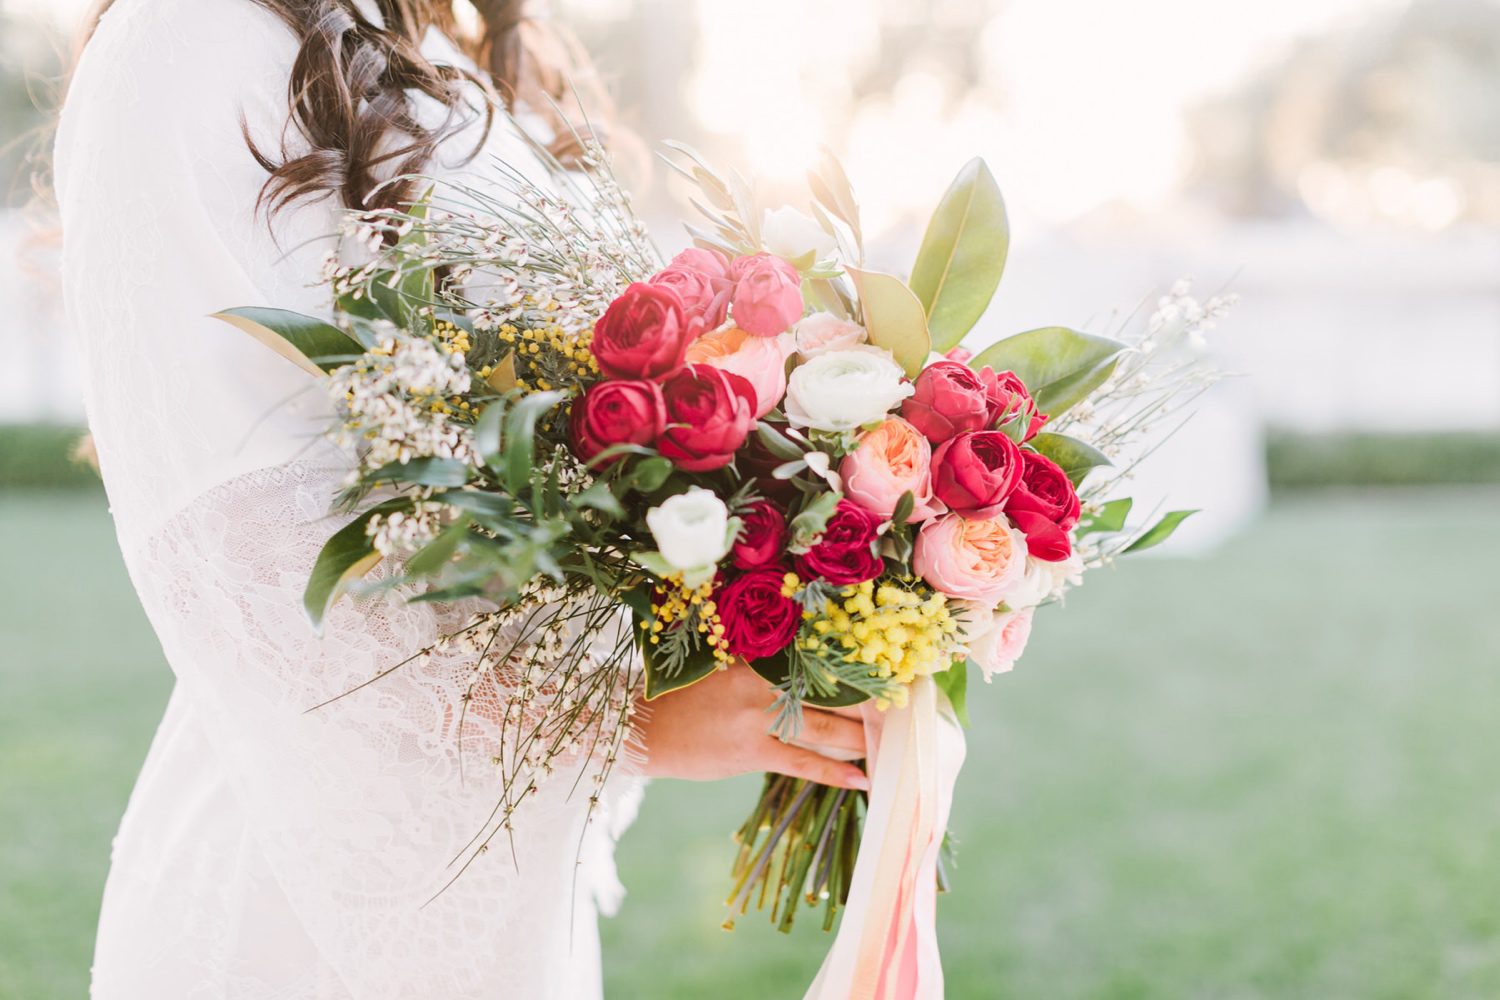 Bride holding colorful wedding bouquet